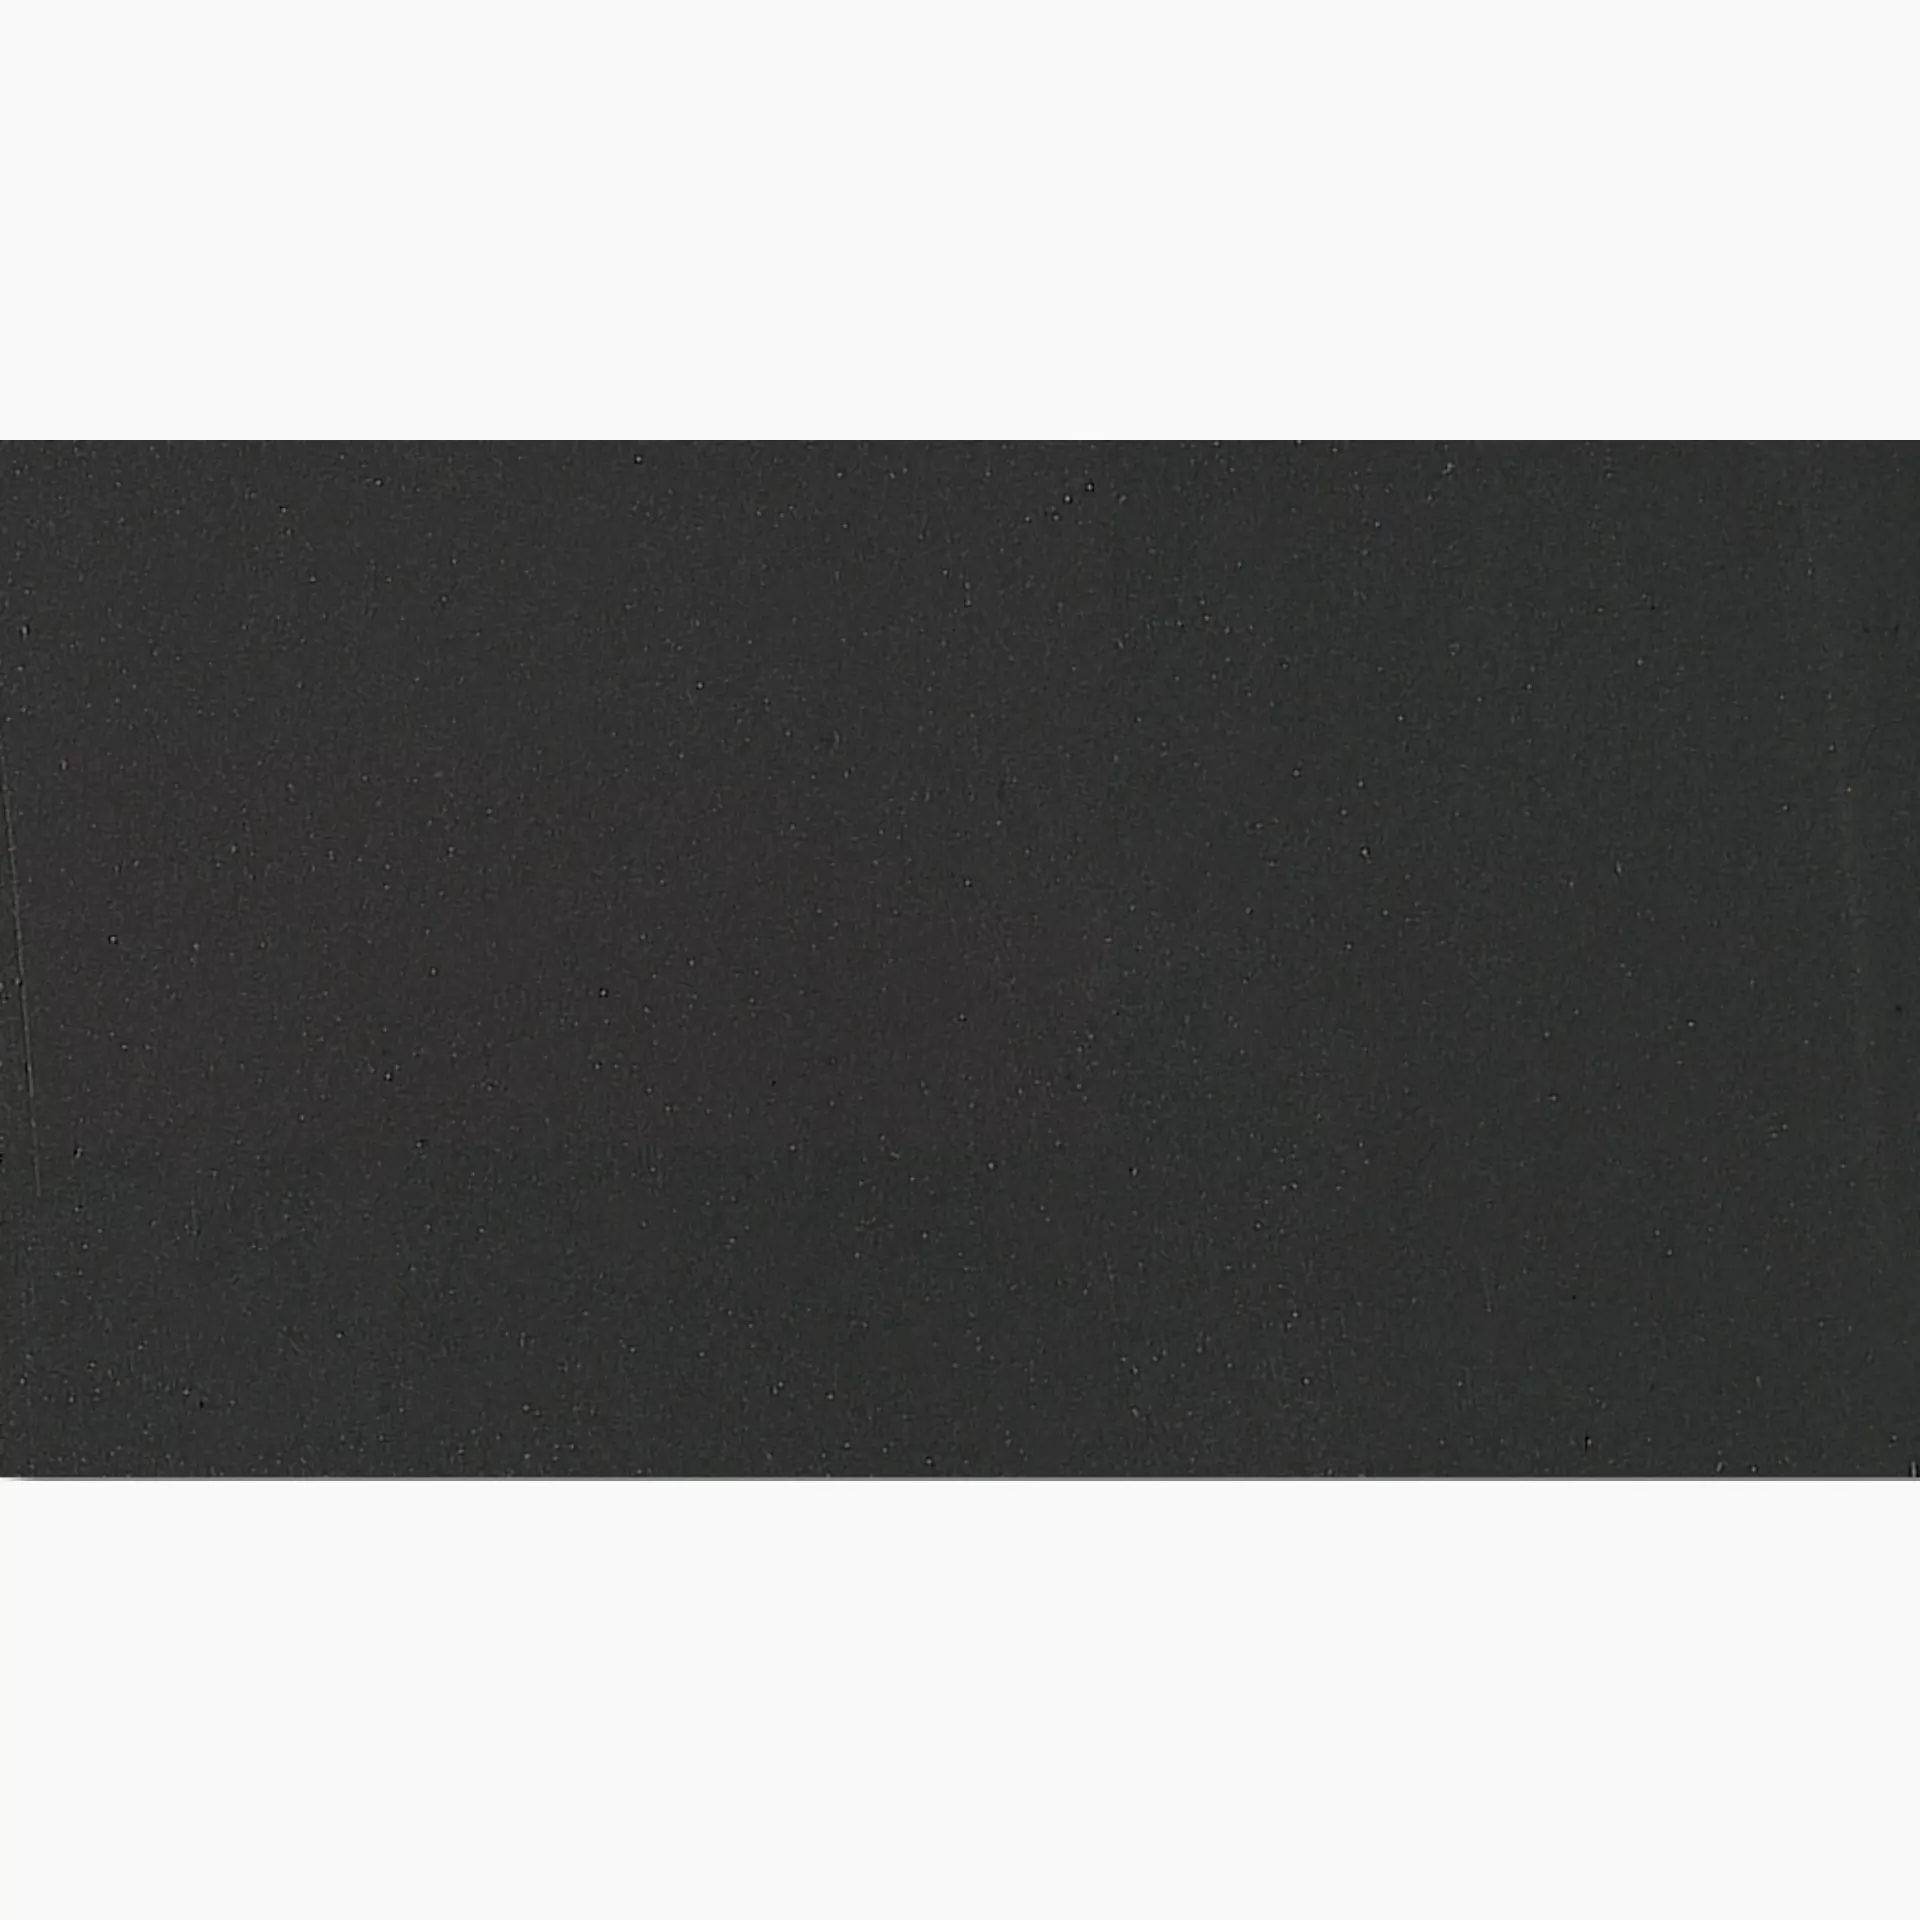 Coem Tinte Unite Warm Black Naturale Warm Black TU3617R natur 30x60cm rektifiziert 11mm